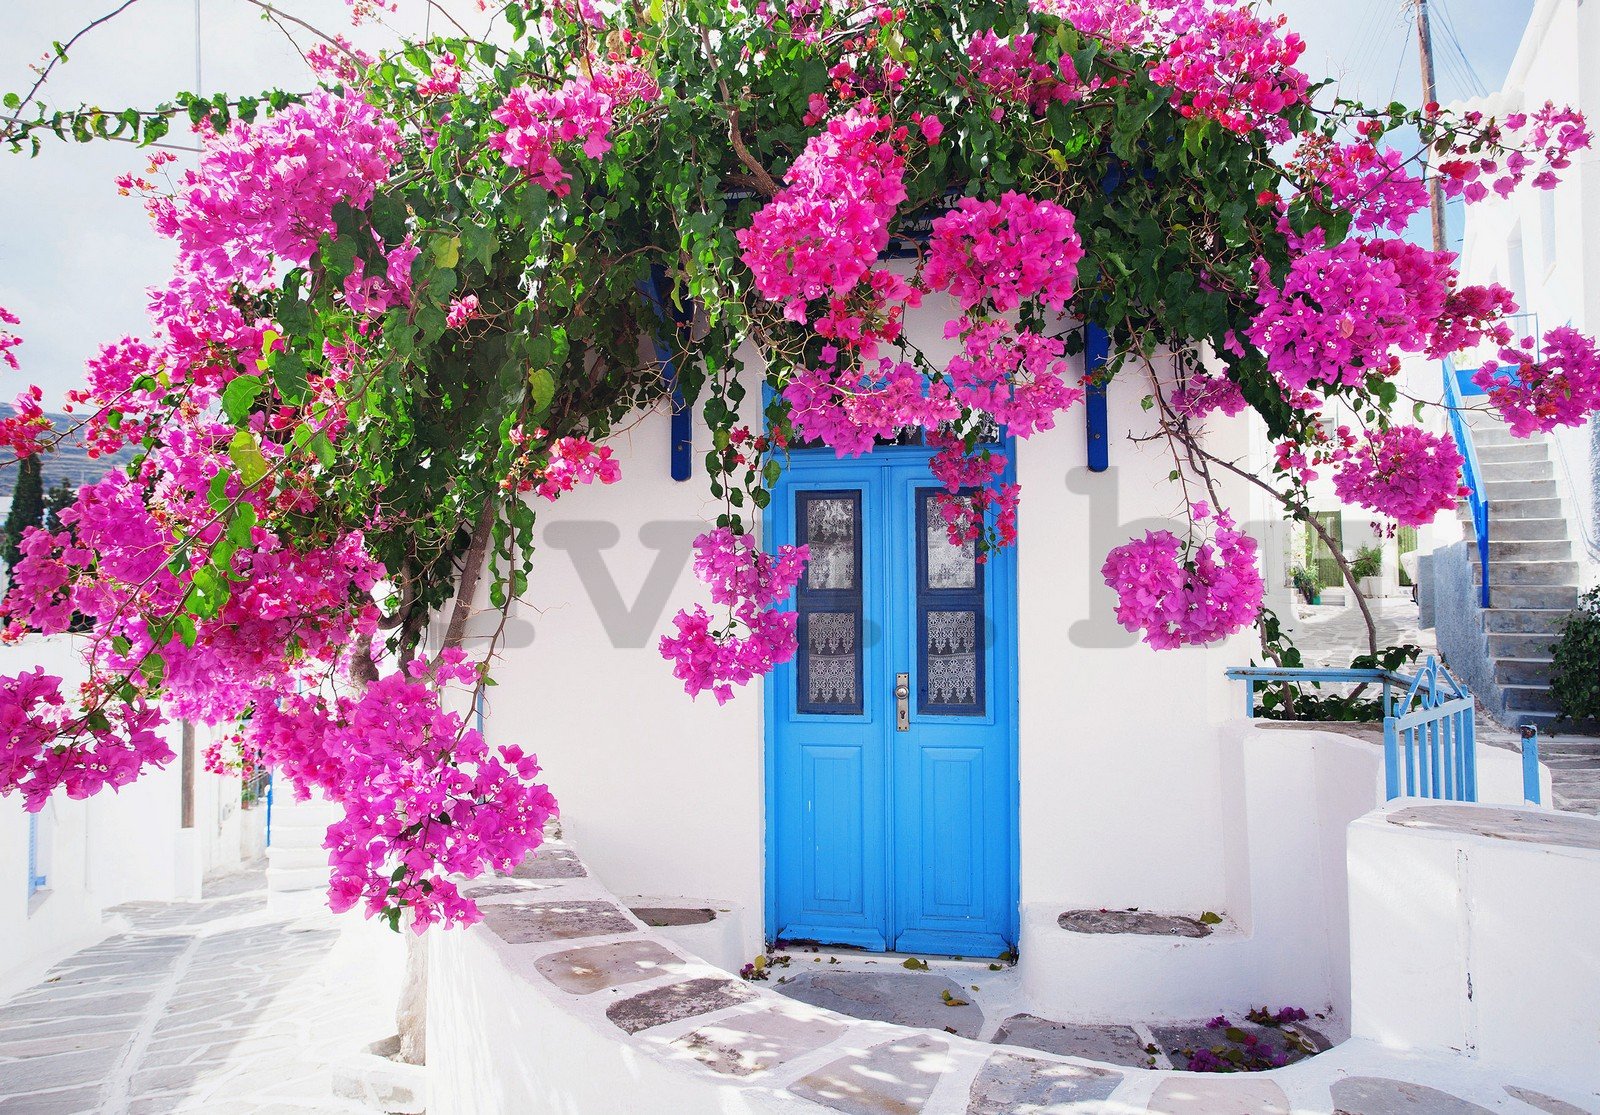 Vlies fotótapéta: Görög utcai virágok (1) - 254x184 cm